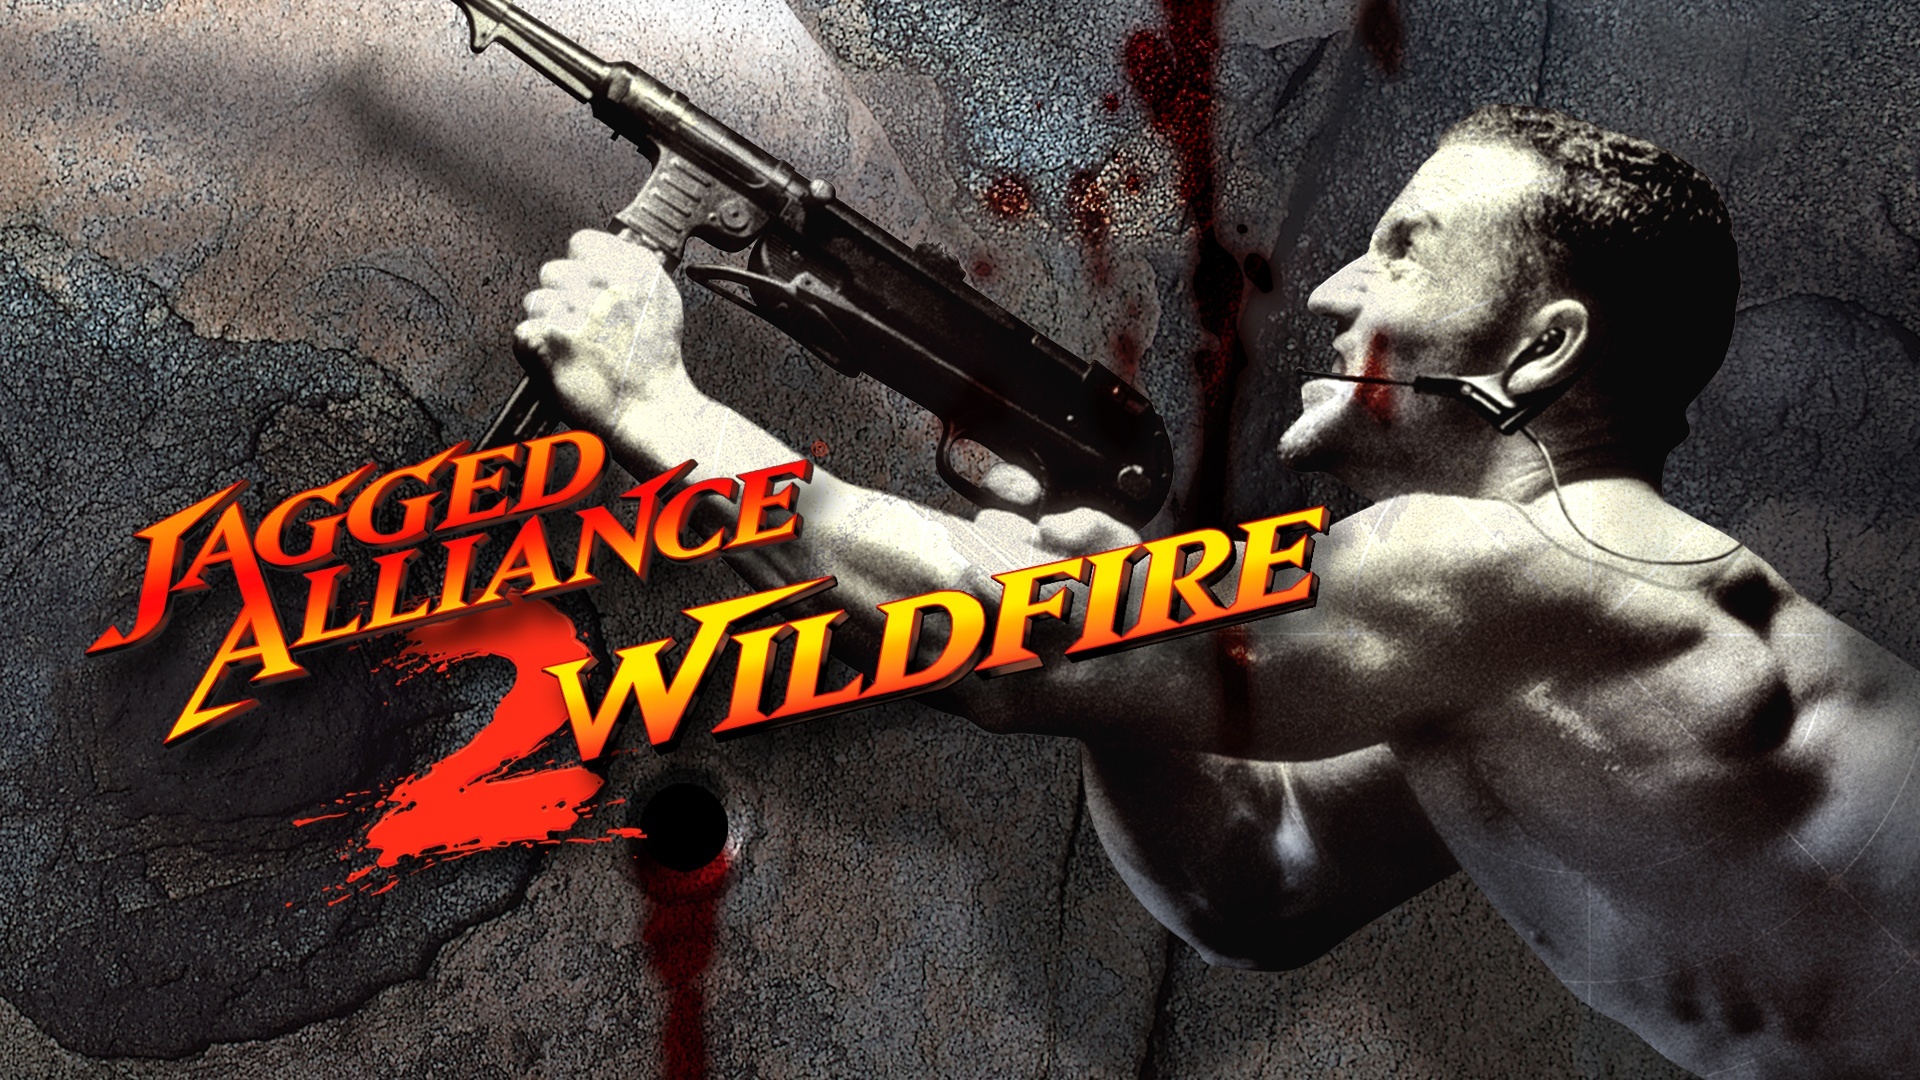 jagged alliance 2 wildfire cheats